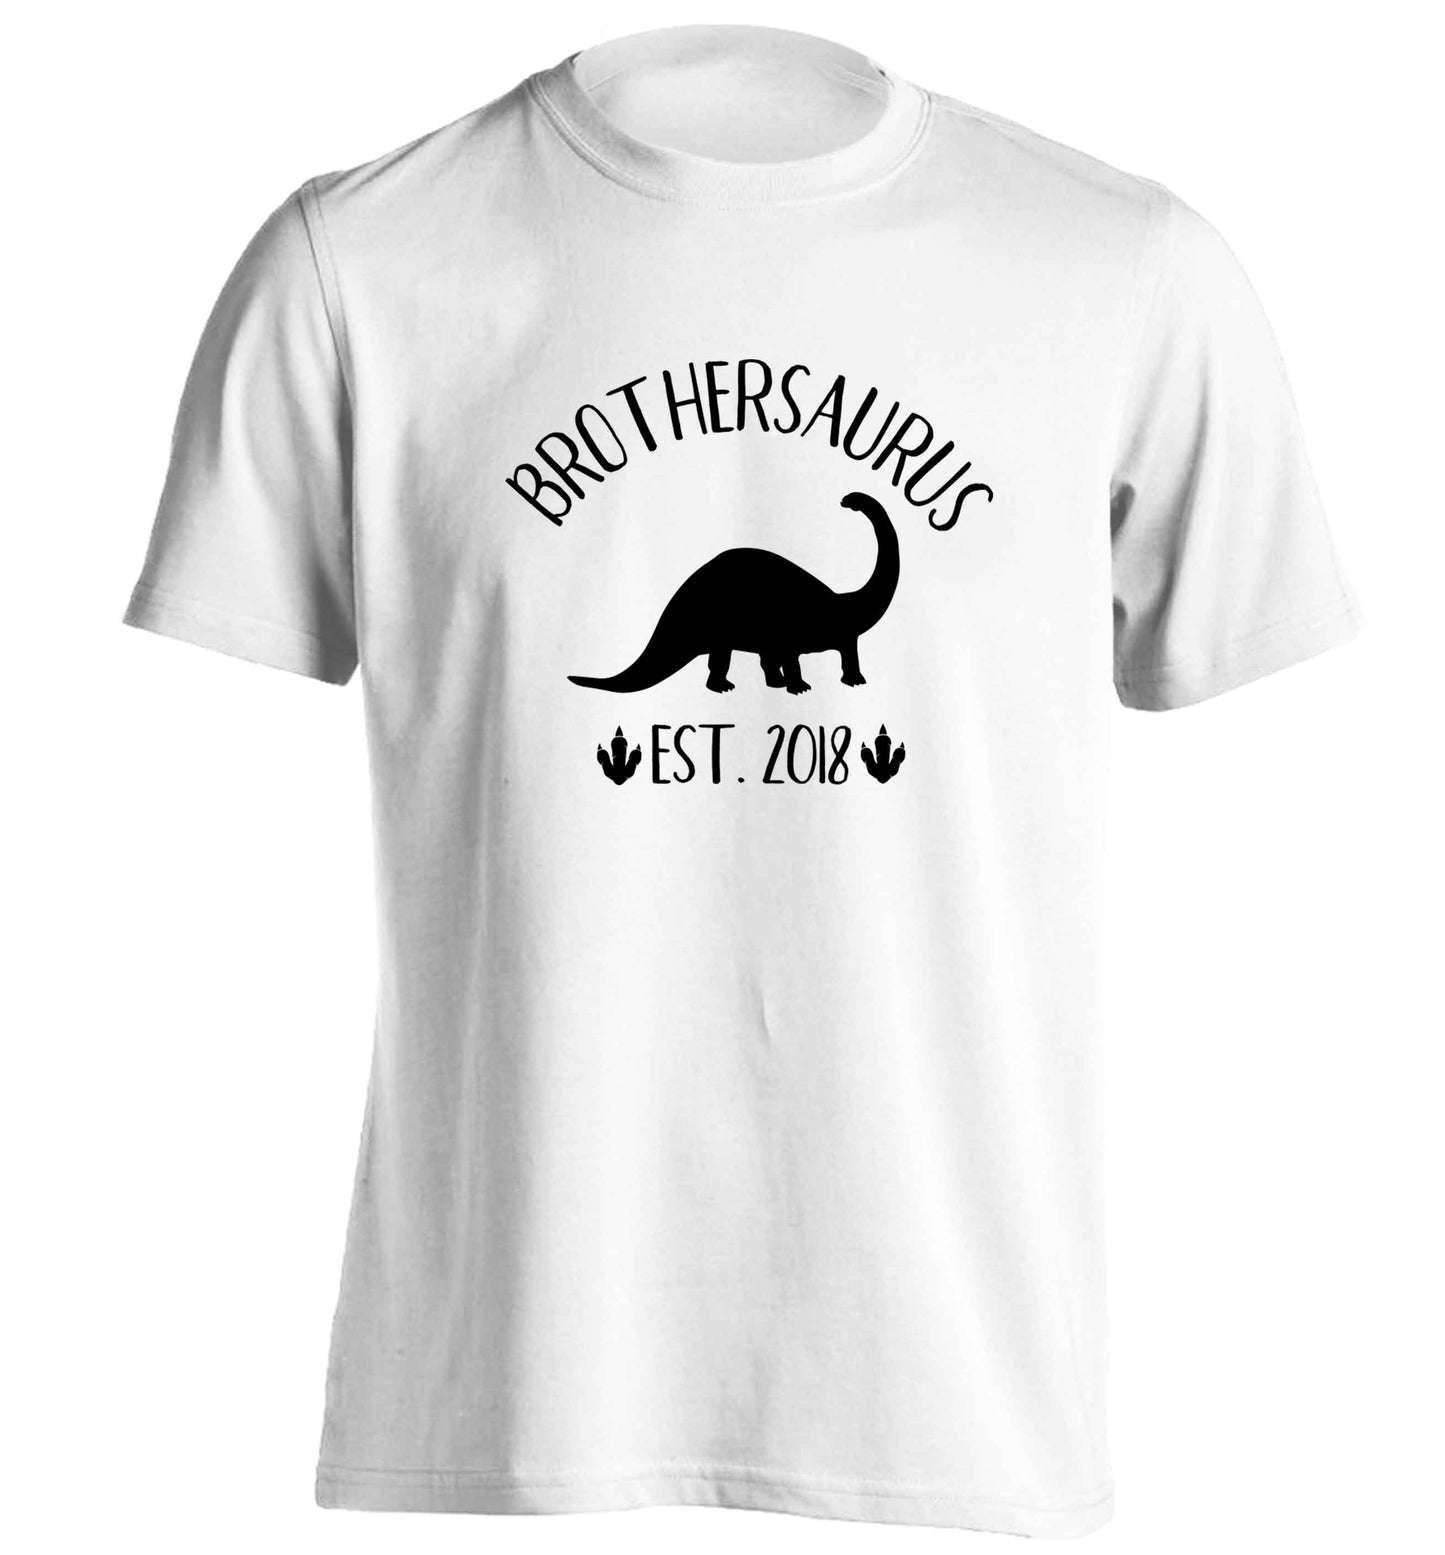 Personalised brothersaurus since (custom date) adults unisex white Tshirt 2XL